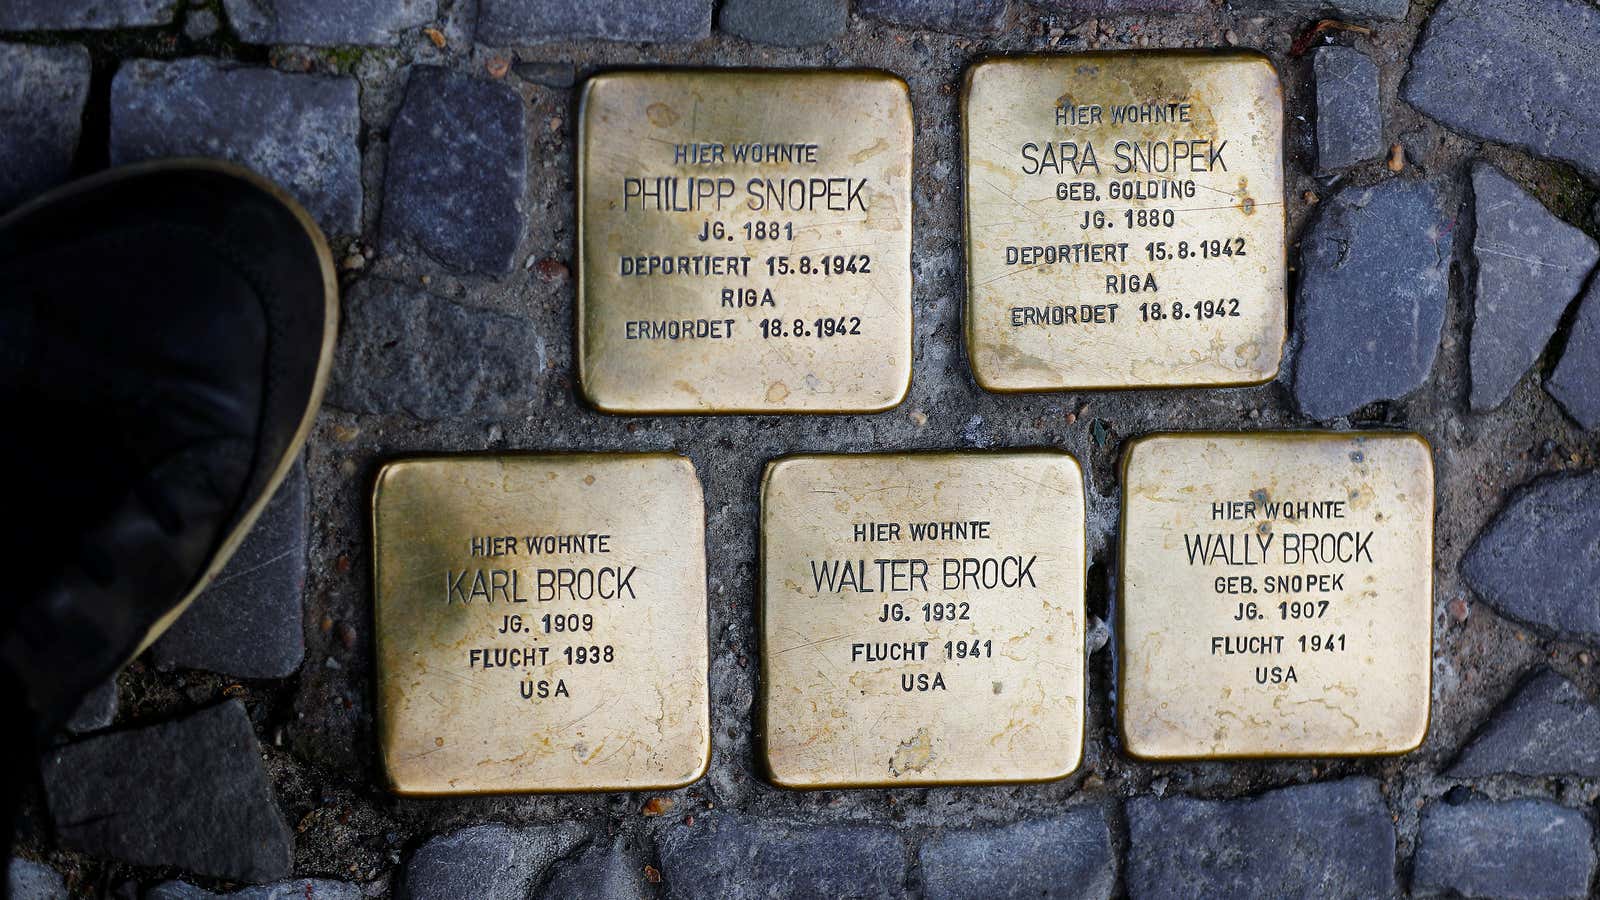 Parts of the Holocaust memorial project “Stolpersteine” (stumbling blocks) in Berlin.